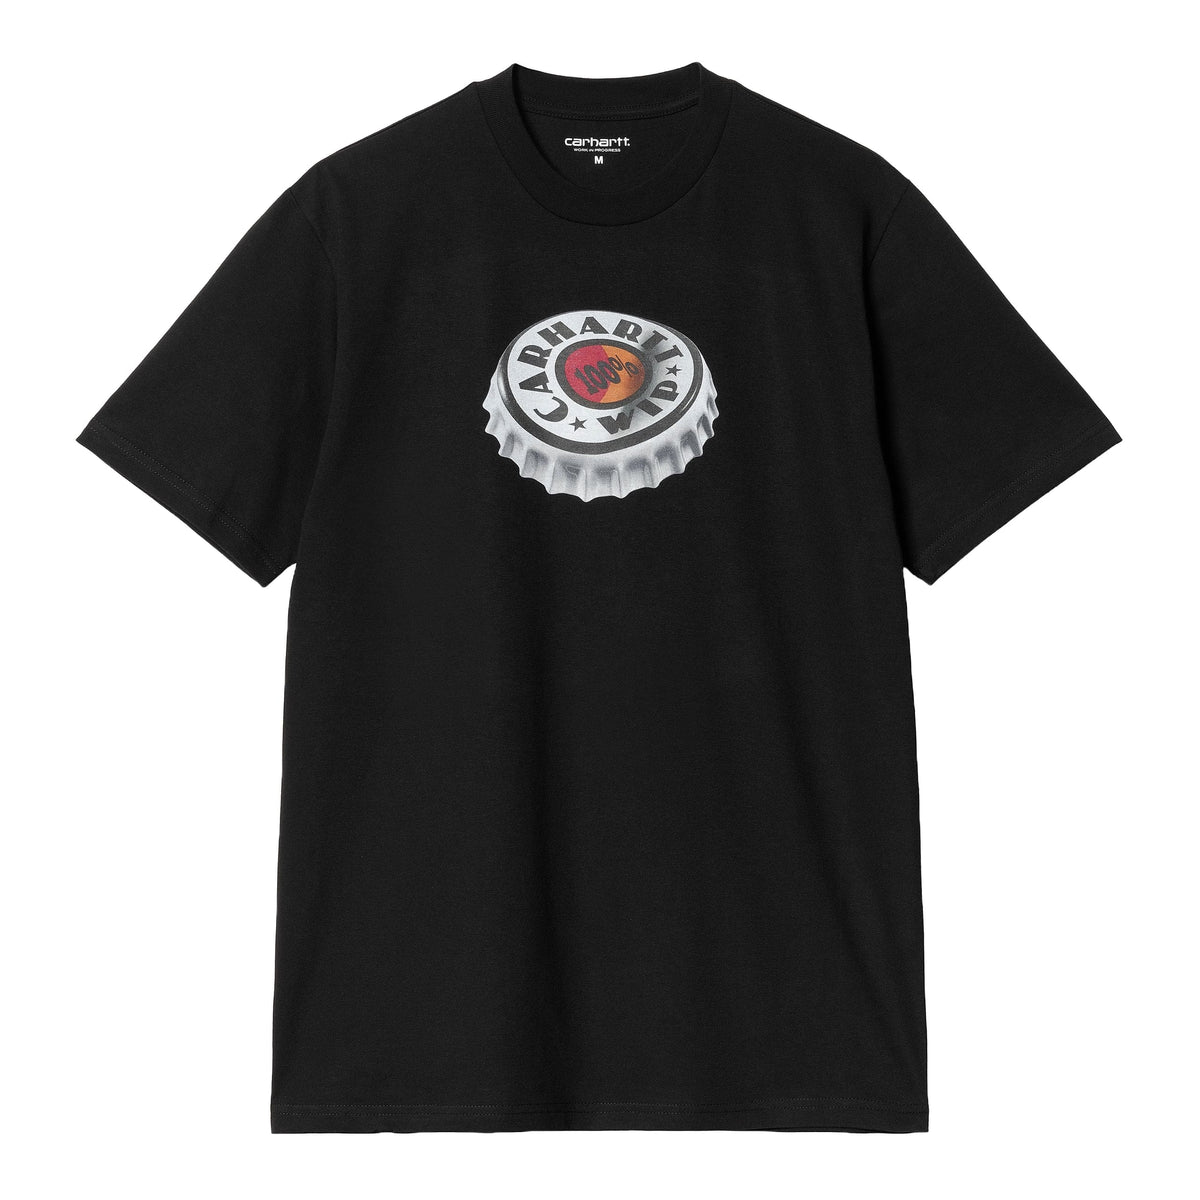 Carhartt Wip Men's T-Shirt Short Sleeve Bottle Cap Black